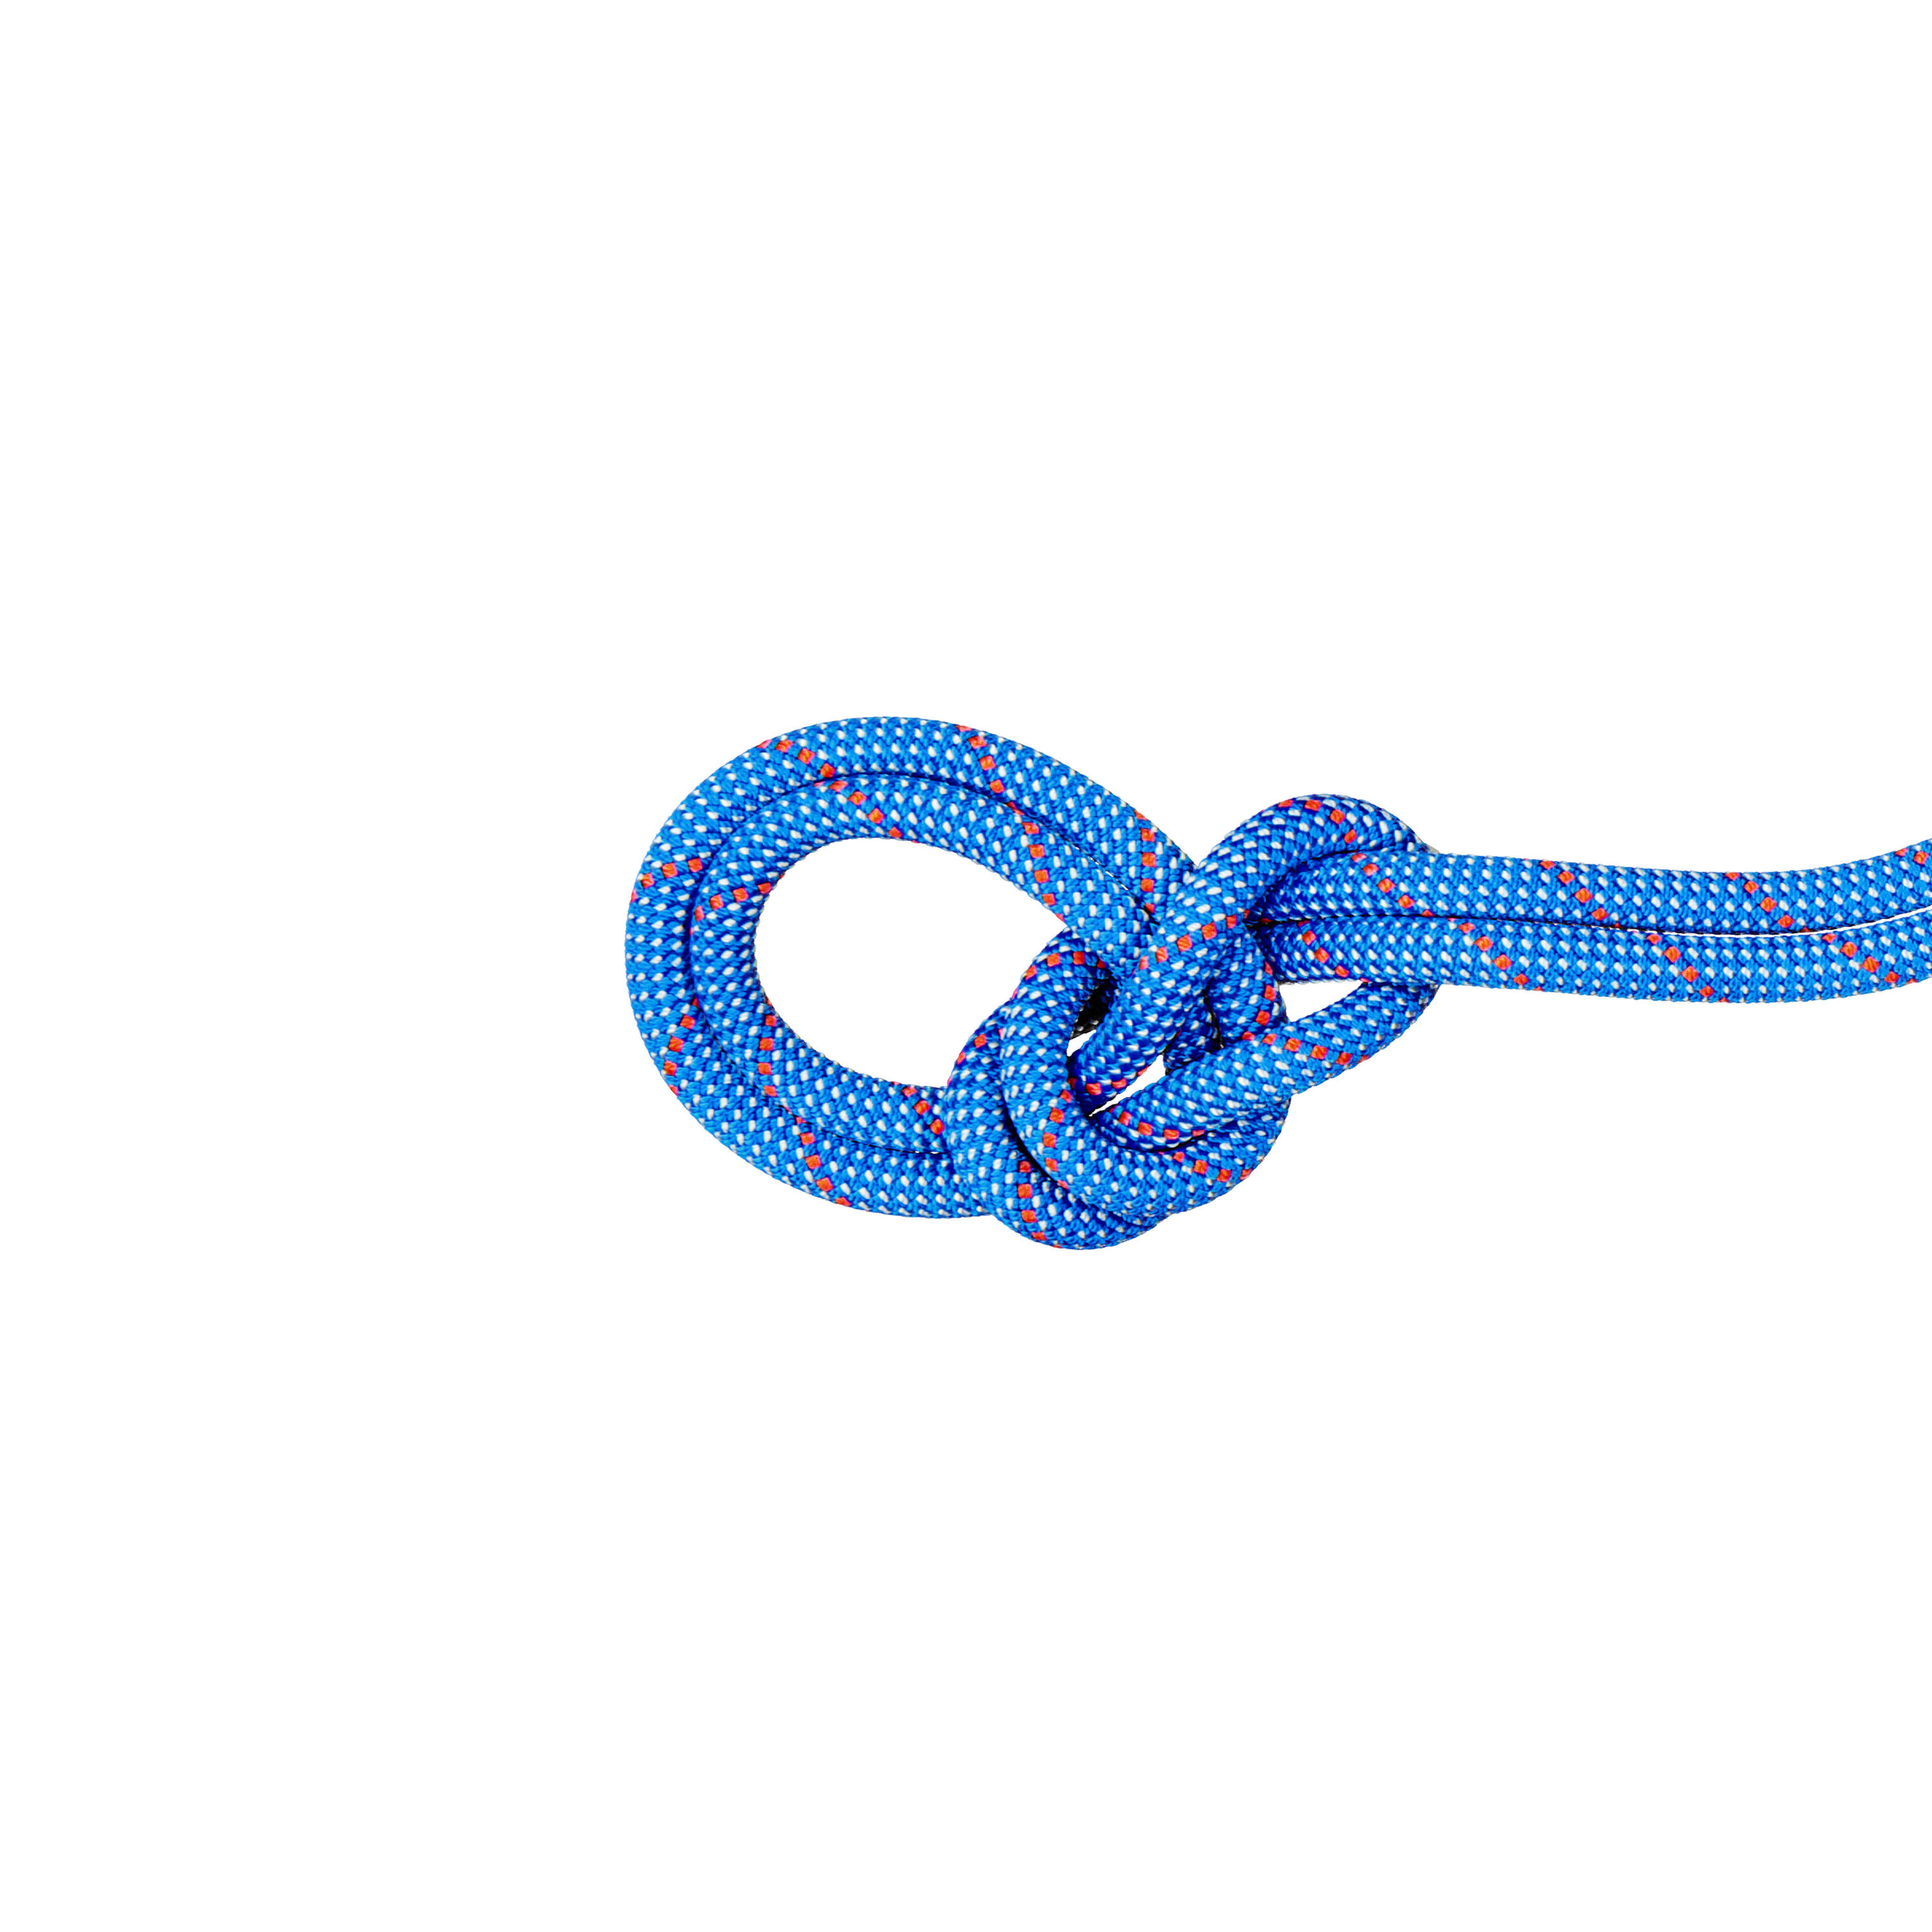 MAMMUT Crag Classic Single Rope 9.5 mm x 60m - Blue